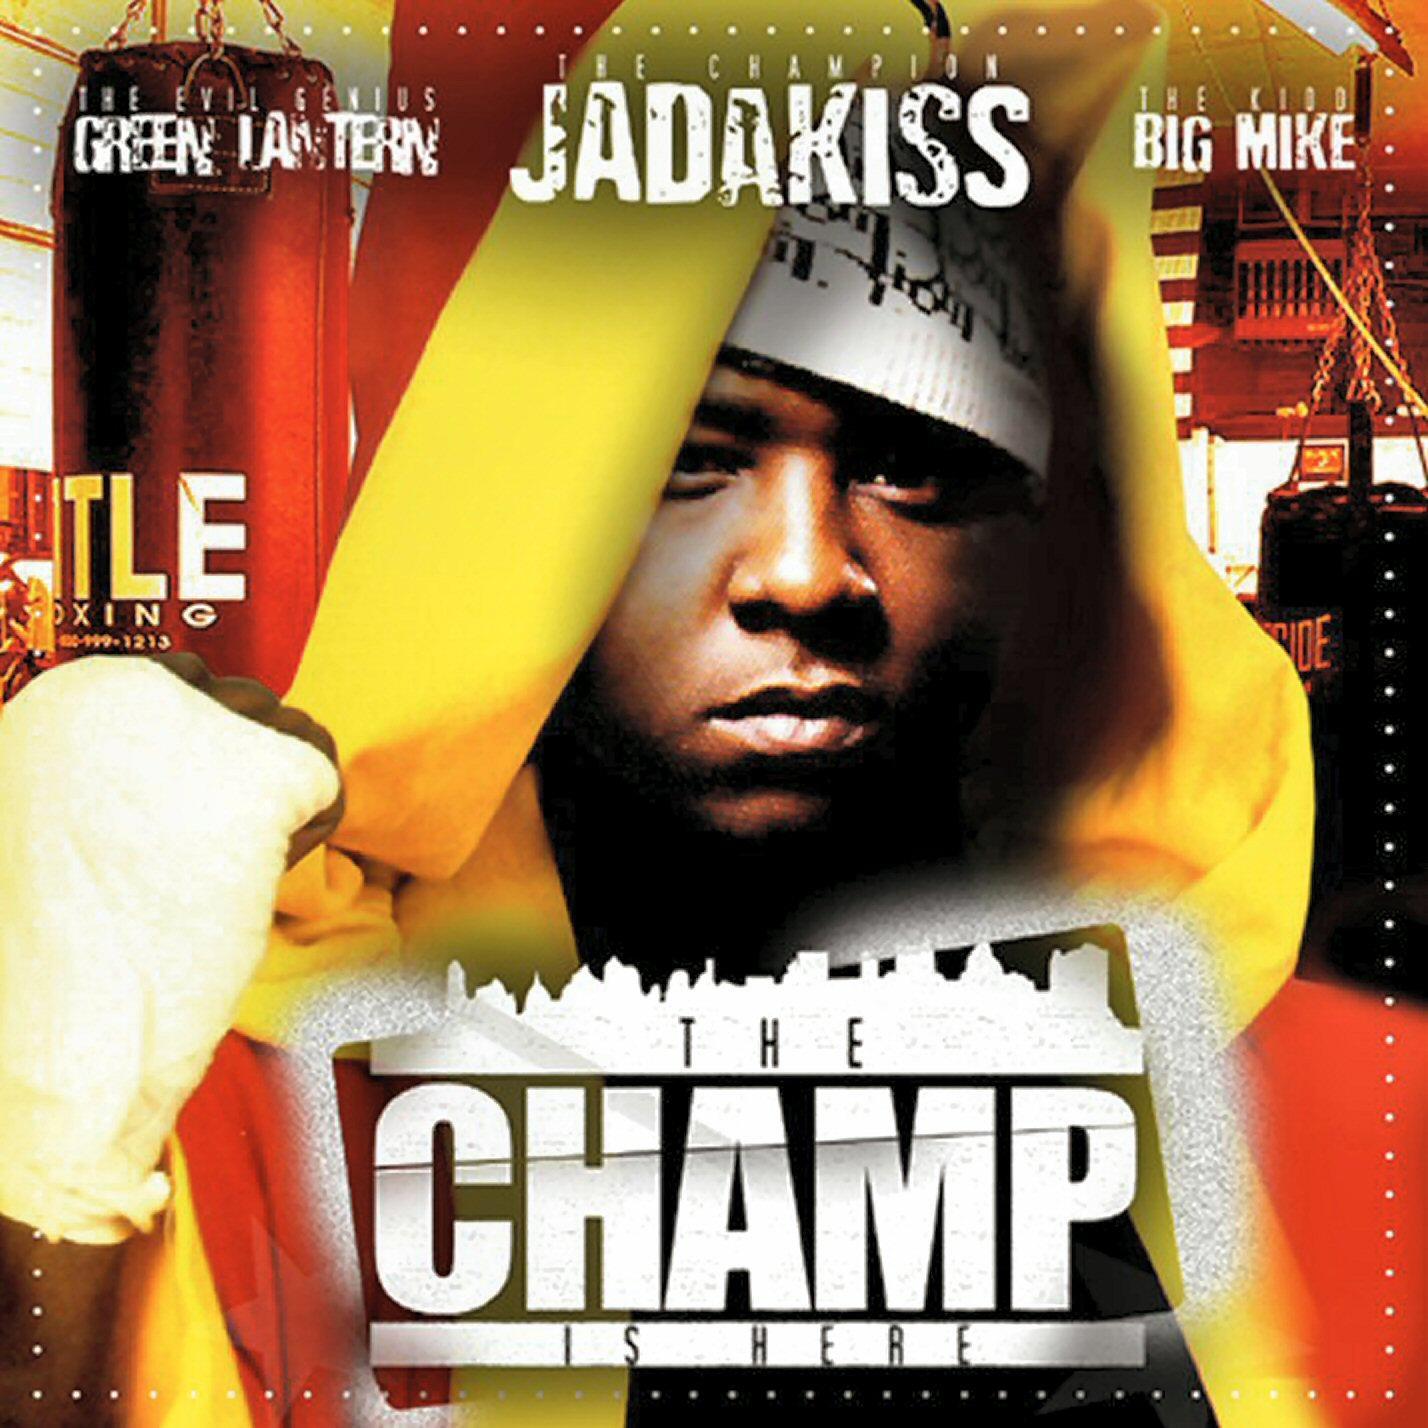 00-dj_green_lantern_big_mike_and_jadakiss-the_champ_is_here-2004.jpg